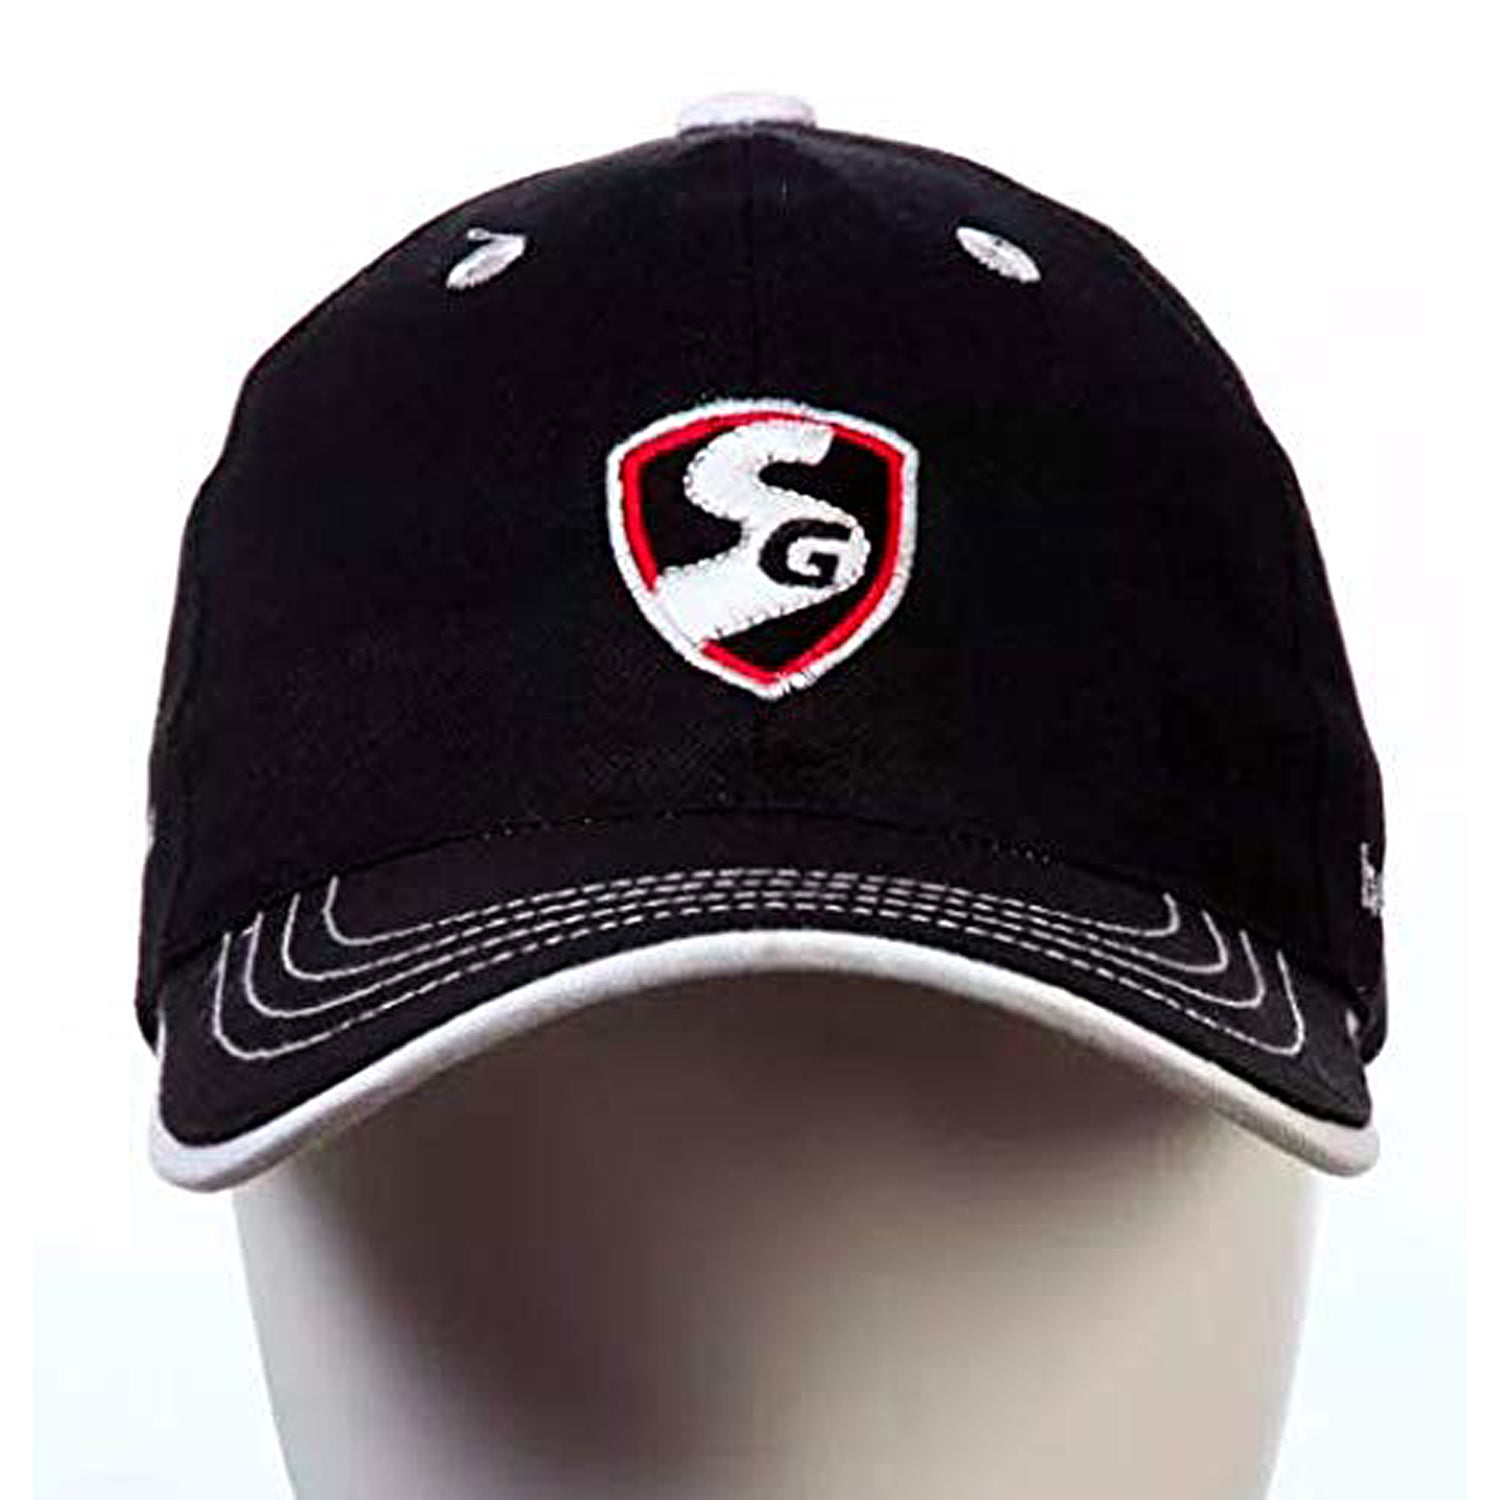 SG Maxxum Cricket Cap - Free Size - Best Price online Prokicksports.com